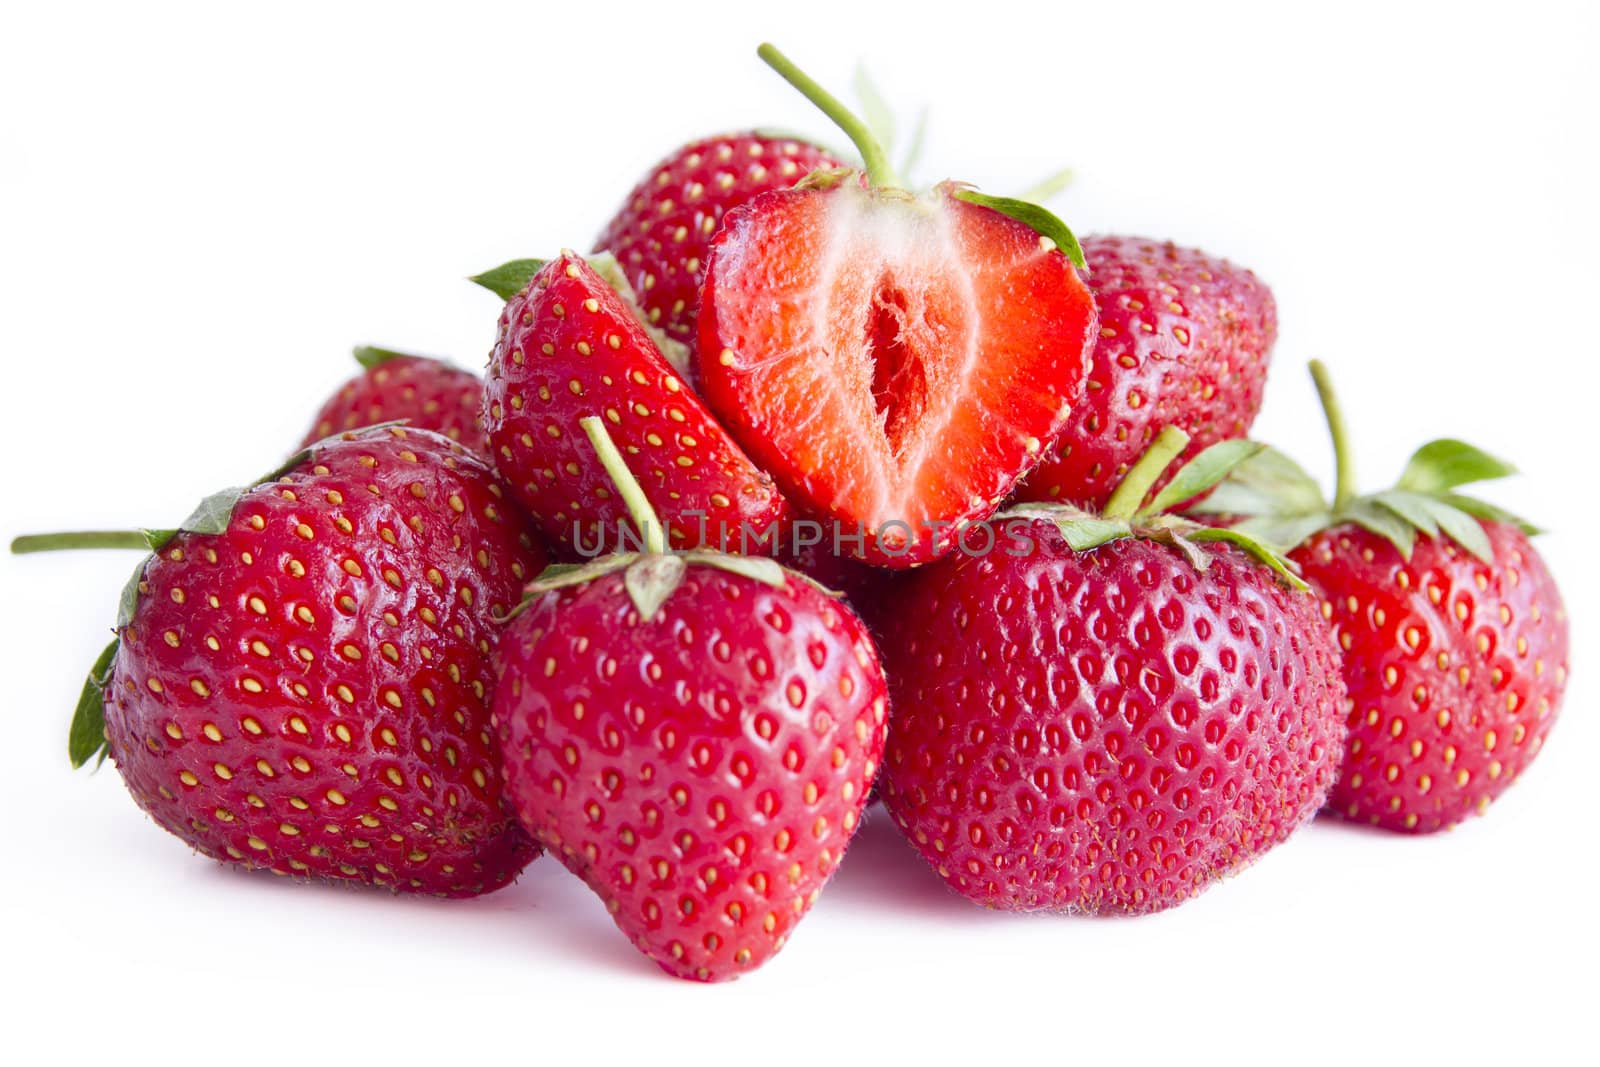 strawberry by manaemedia